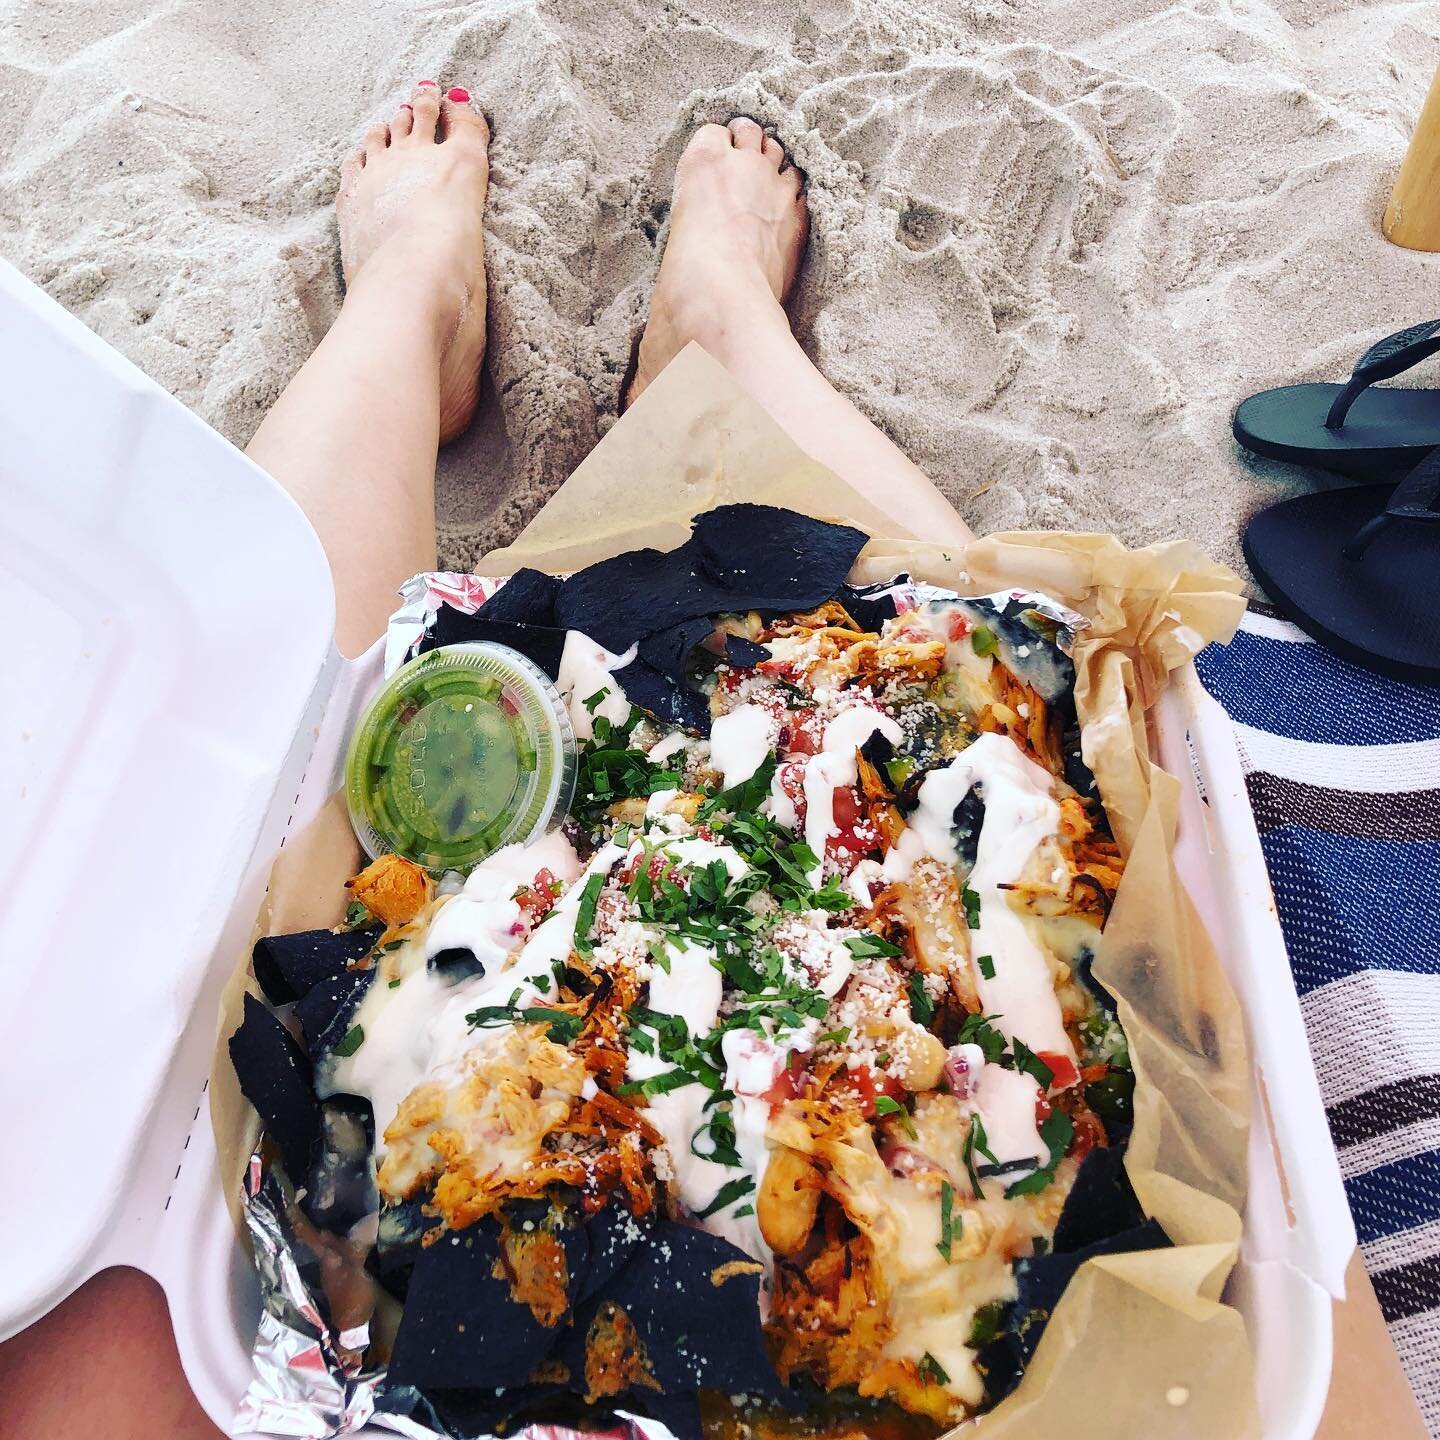 Possibly heaven

#vacay #nachos #sand #summer #lastdayofaugust #capemay #summervibe #nachosjunkie #thelife @tacocaballitocapemay